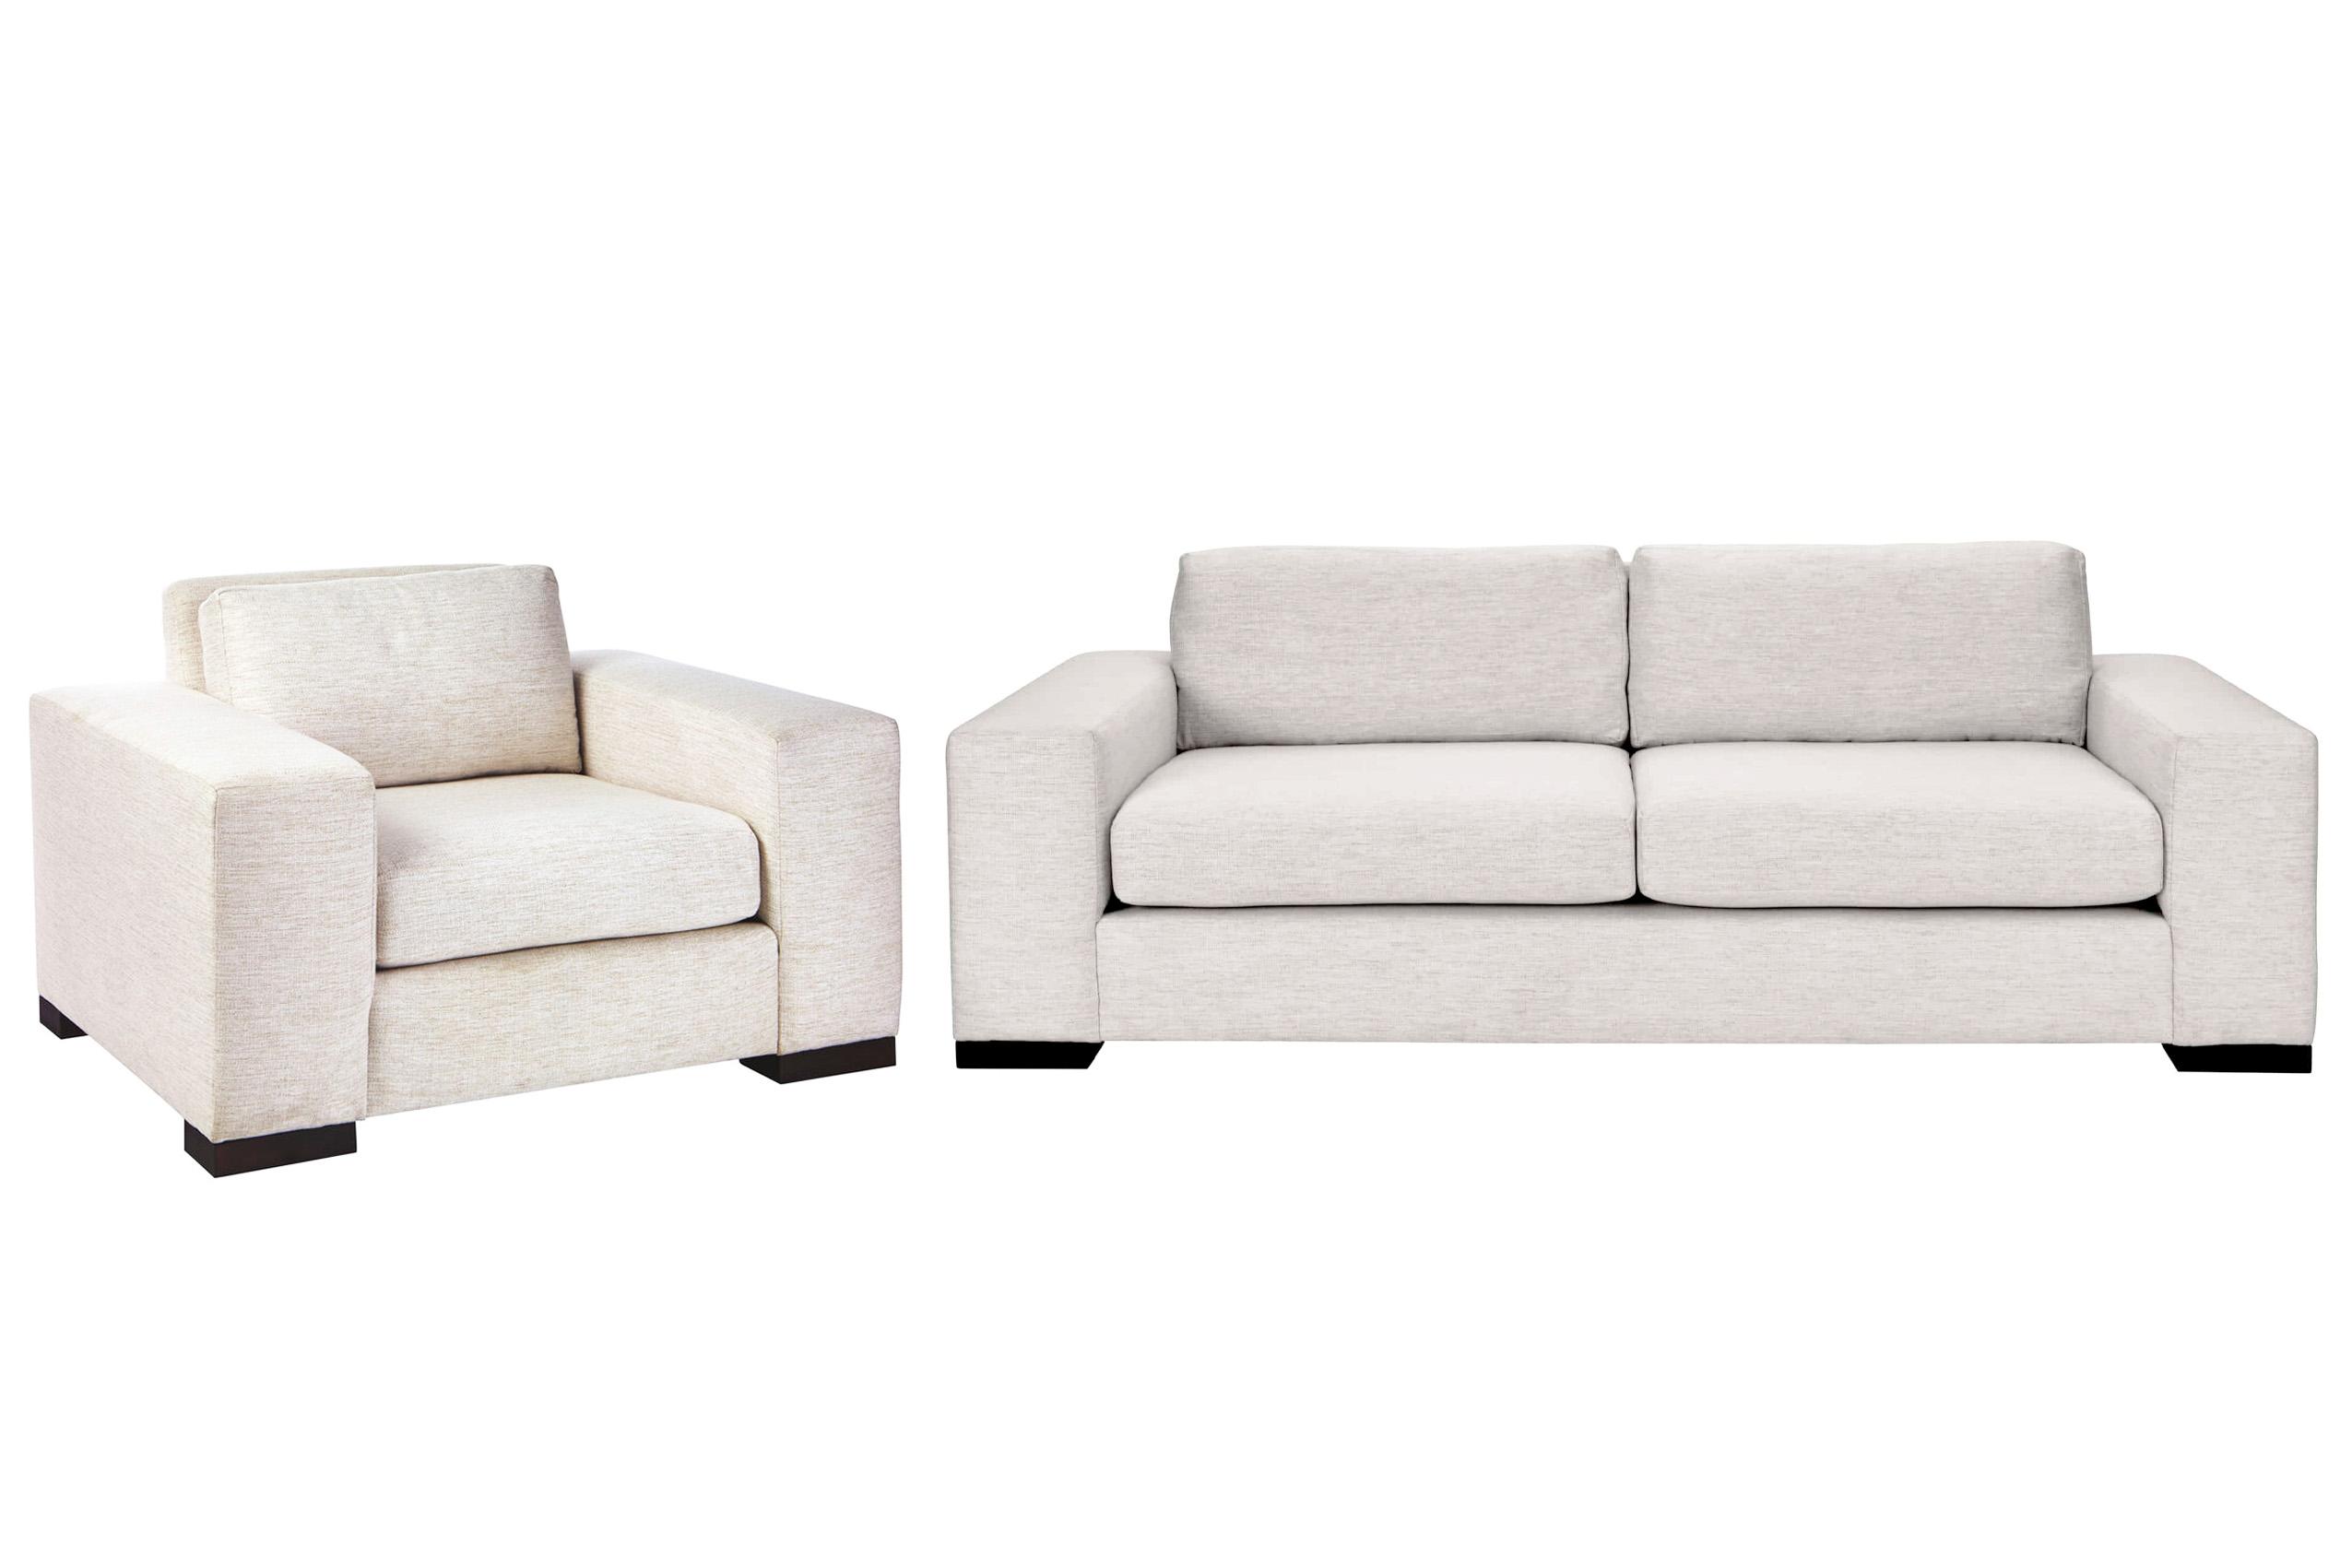 Contemporary, Modern Sofa Set 773501-5015FX-Set 773501-5015FX-Set-2 in White 